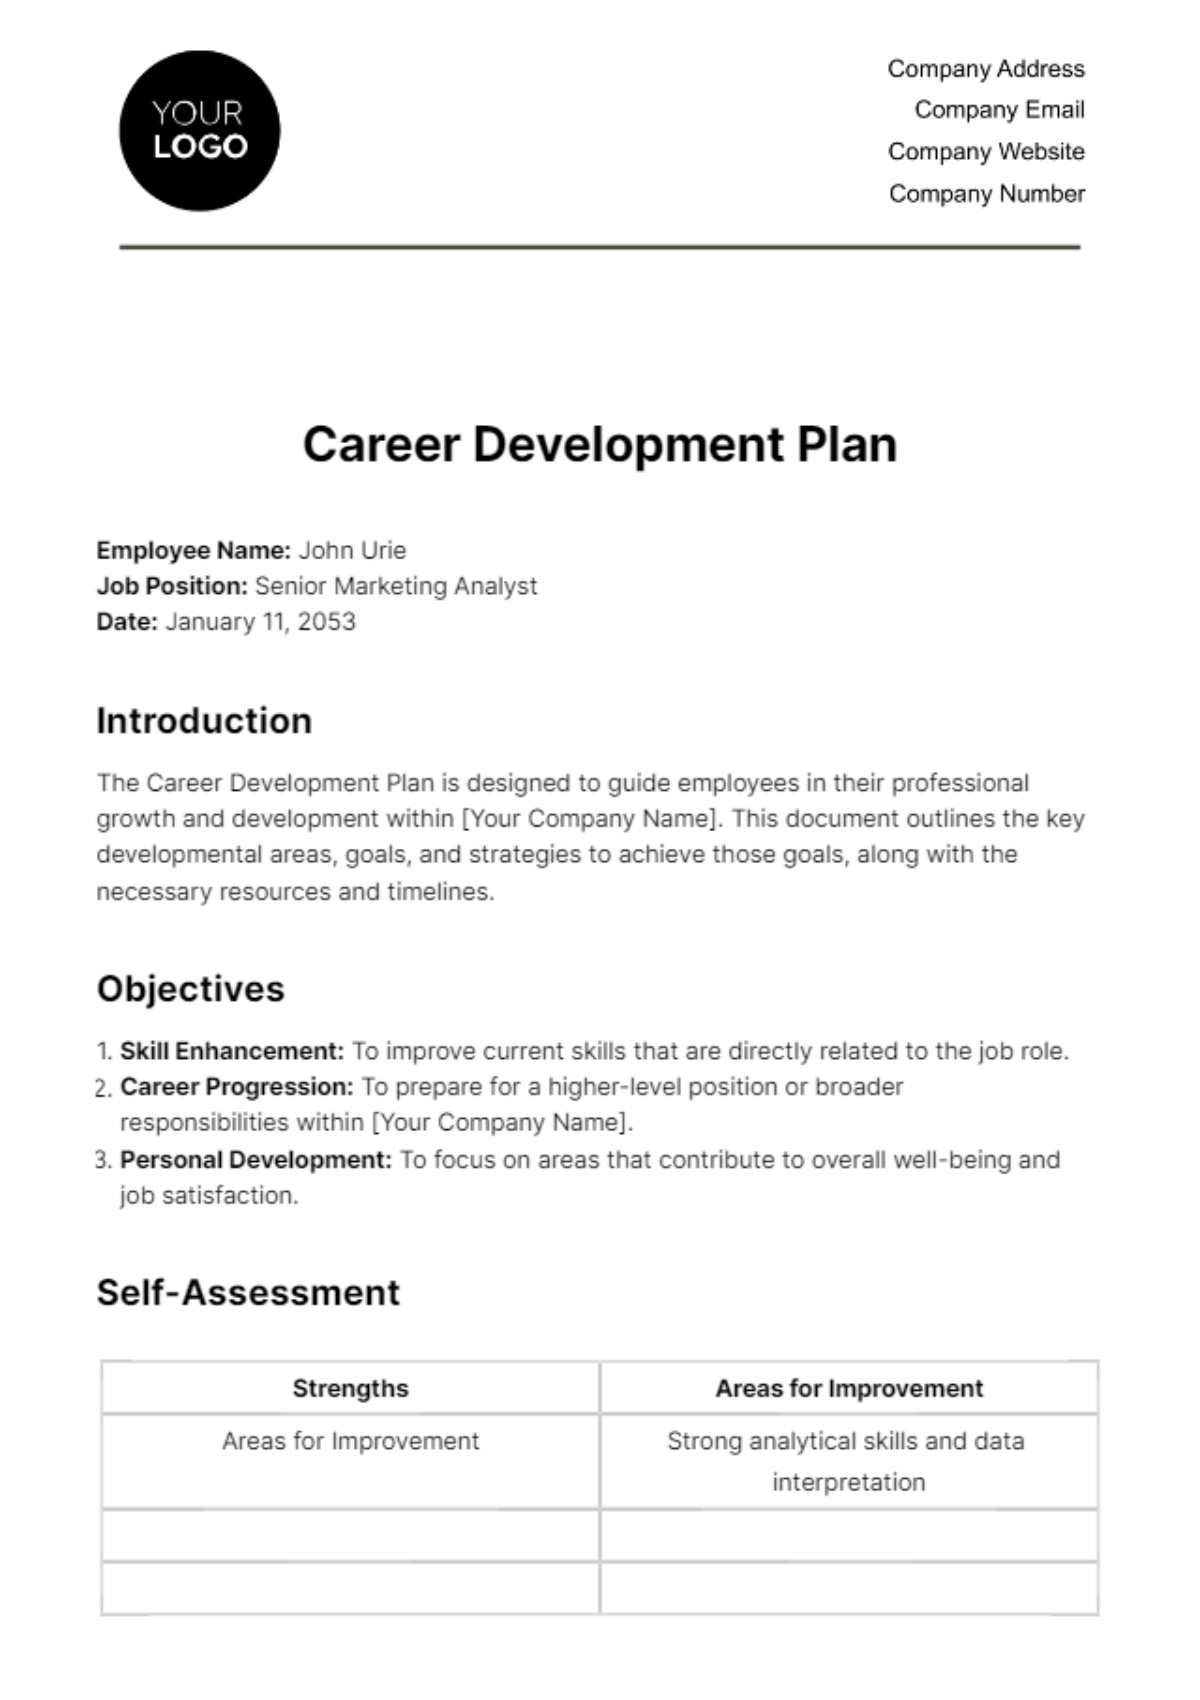 Free Career Development Plan HR Template